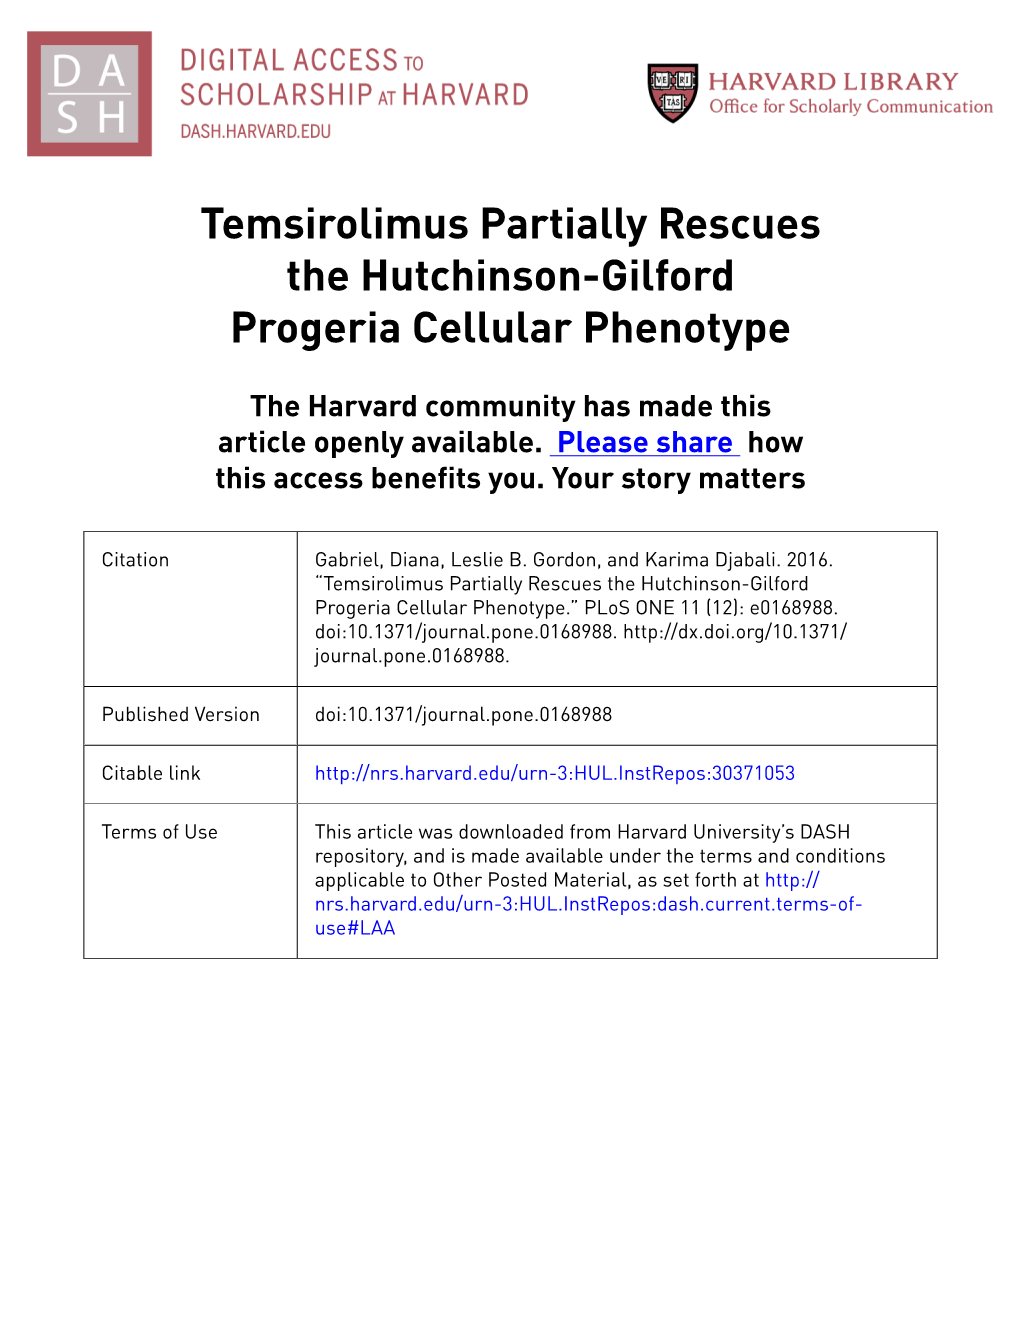 Temsirolimus Partially Rescues the Hutchinson-Gilford Progeria Cellular Phenotype